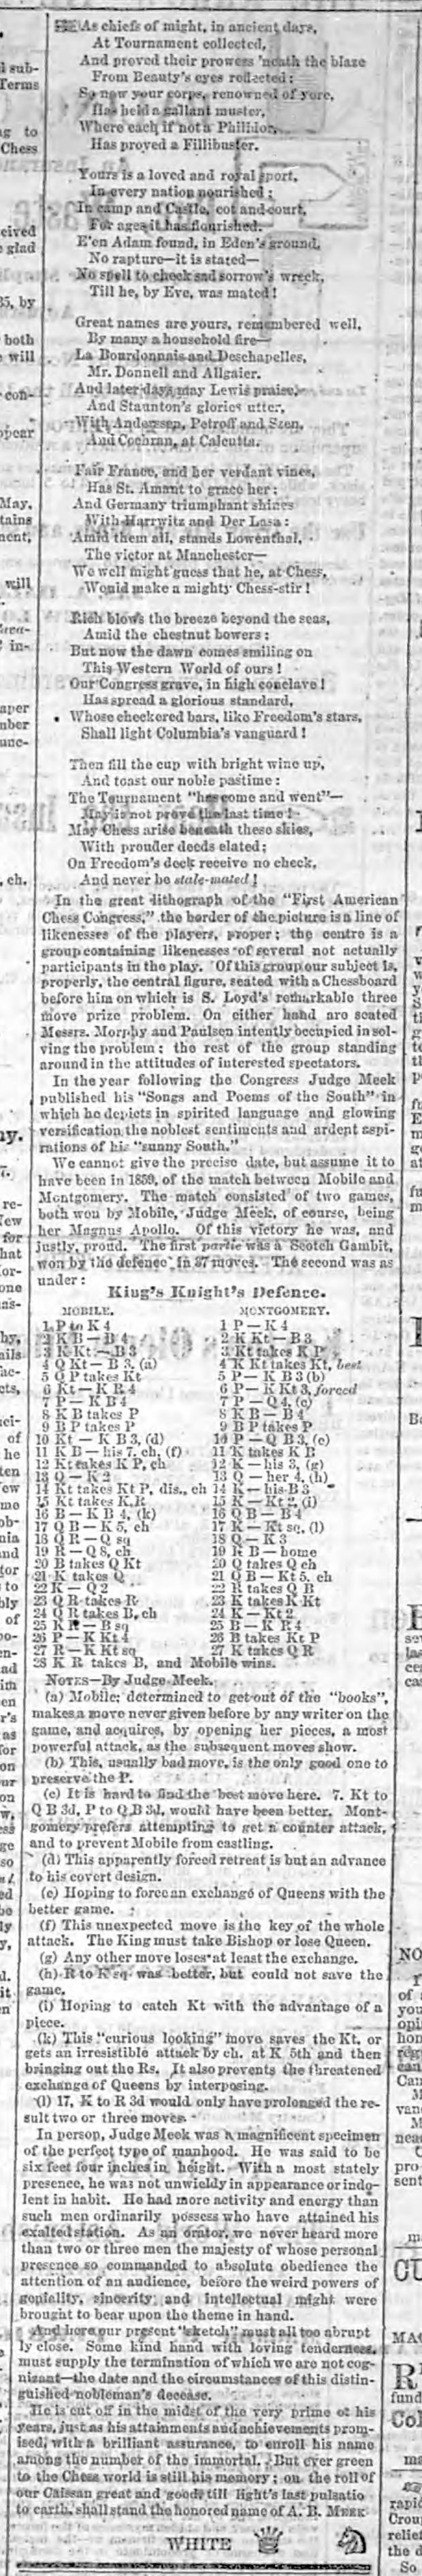 1867.05.31-02 Macon Georgia Weekly Telegraph.jpg